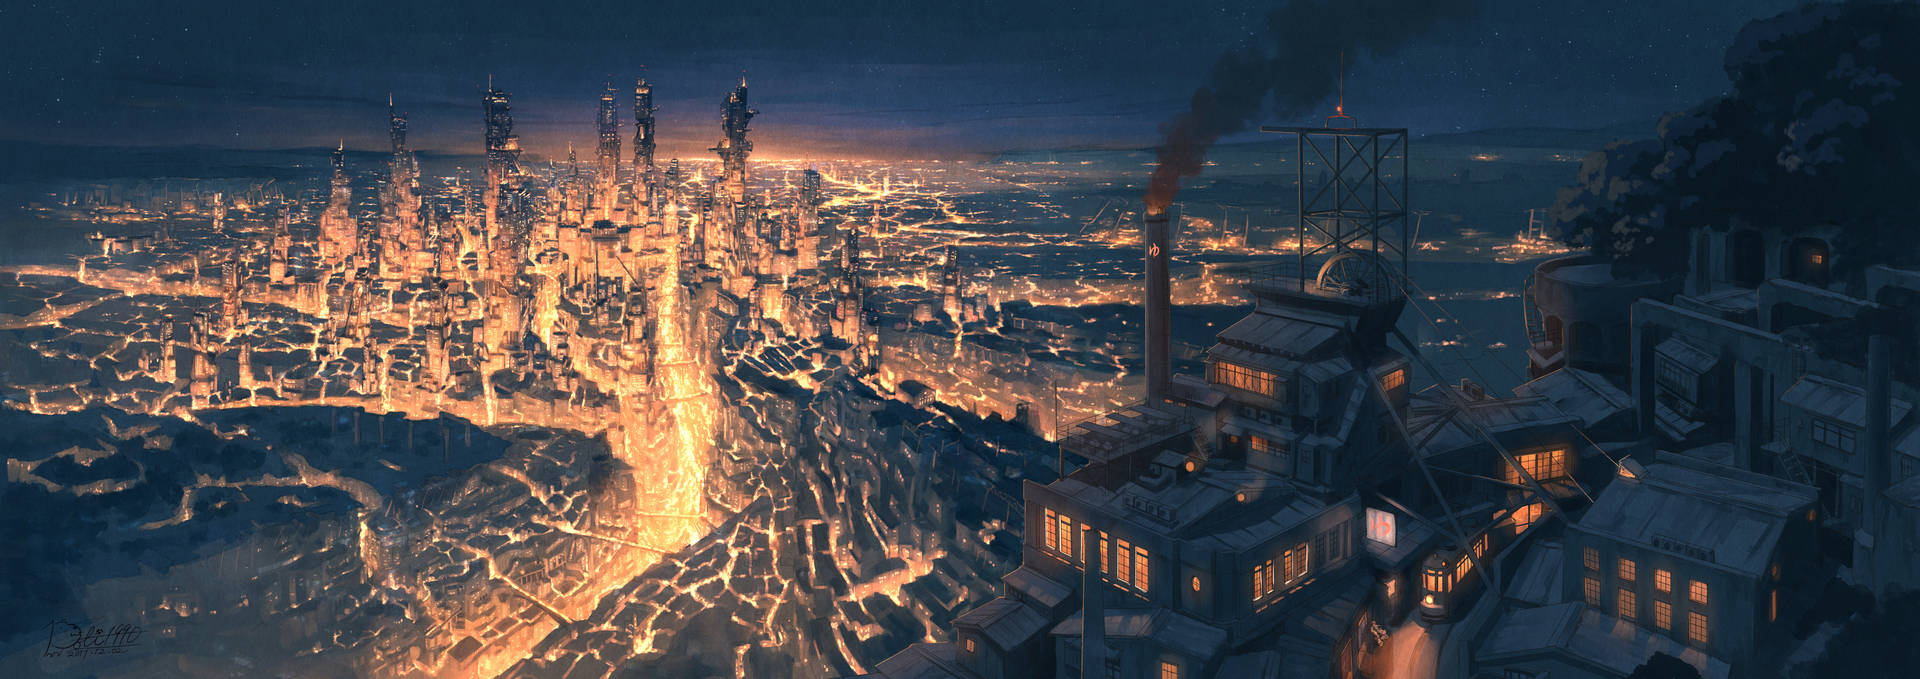 Entfliehein Diese Atemberaubende Anime-nachtstadt Wallpaper